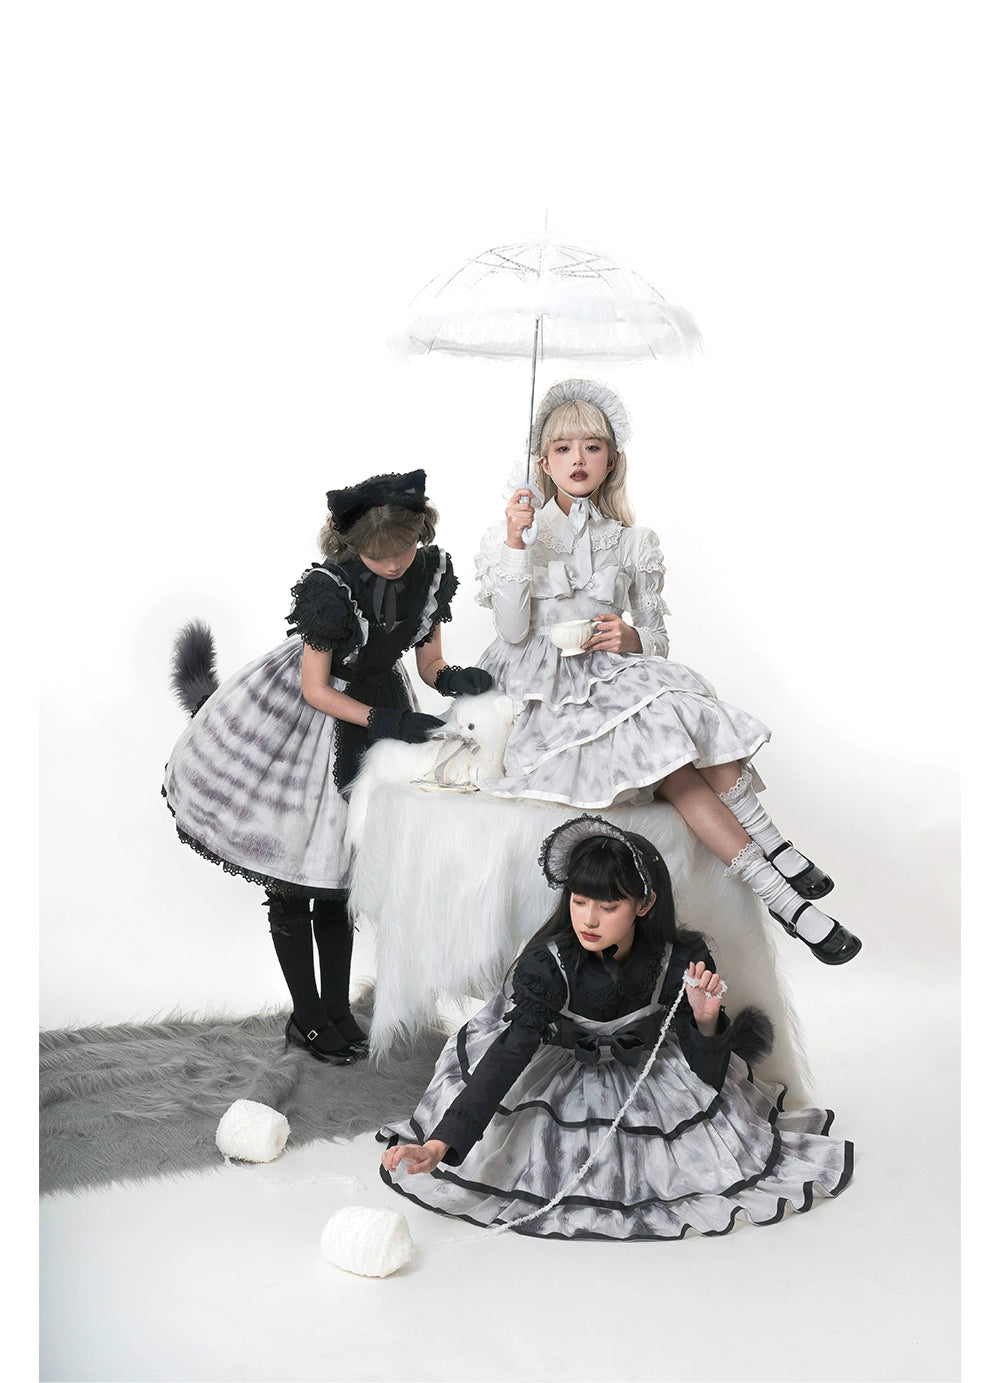 Choker Rabbit~Tabby Cat~Sweet Lolita Salopette Cat Pattern Dress Multicolors   